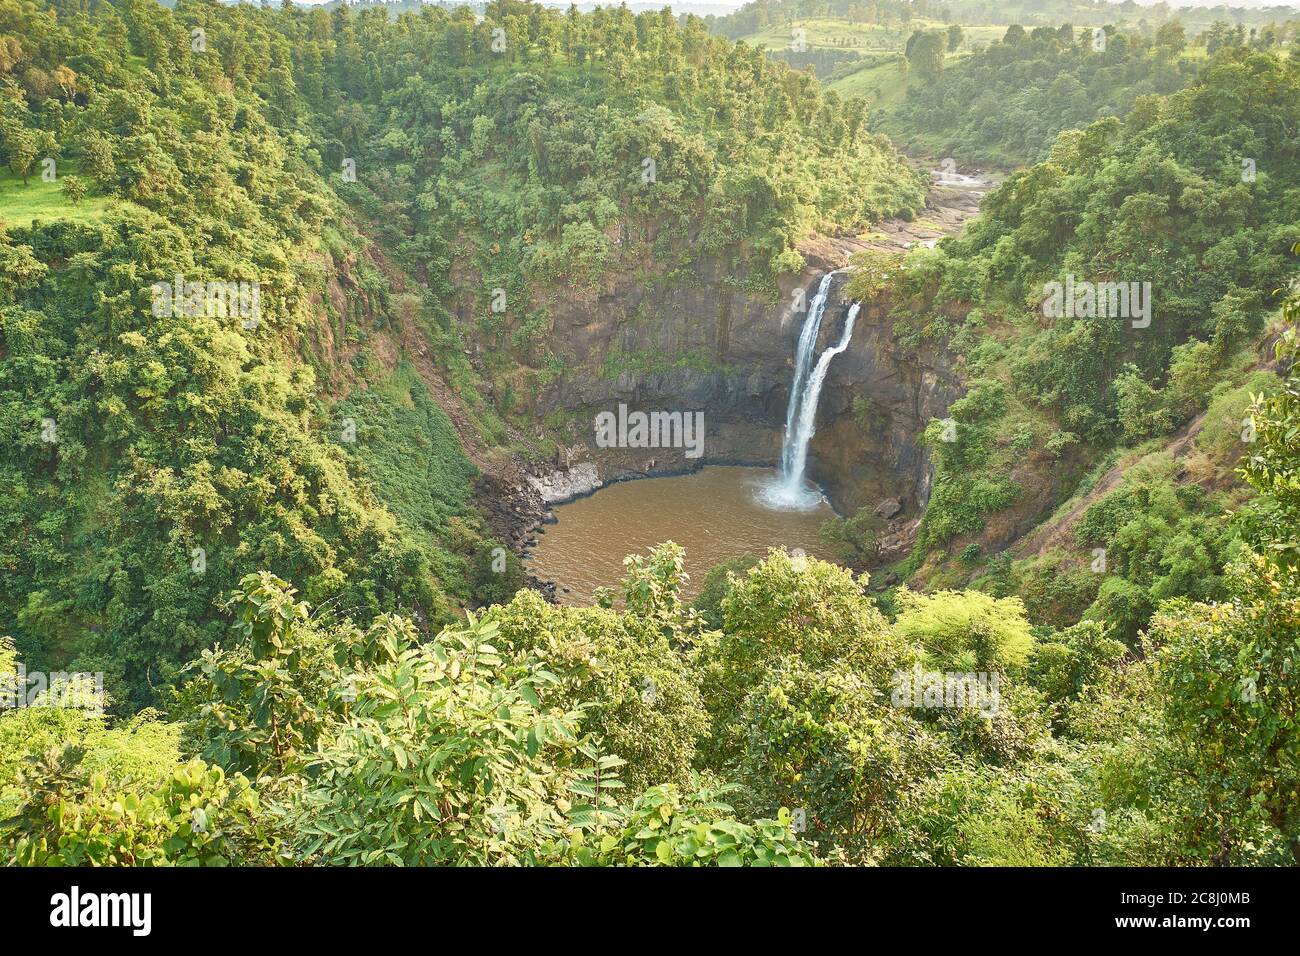 The Dabhosa Falls in Maharashtra, India, fall ovber 900 feet. Stock Photo